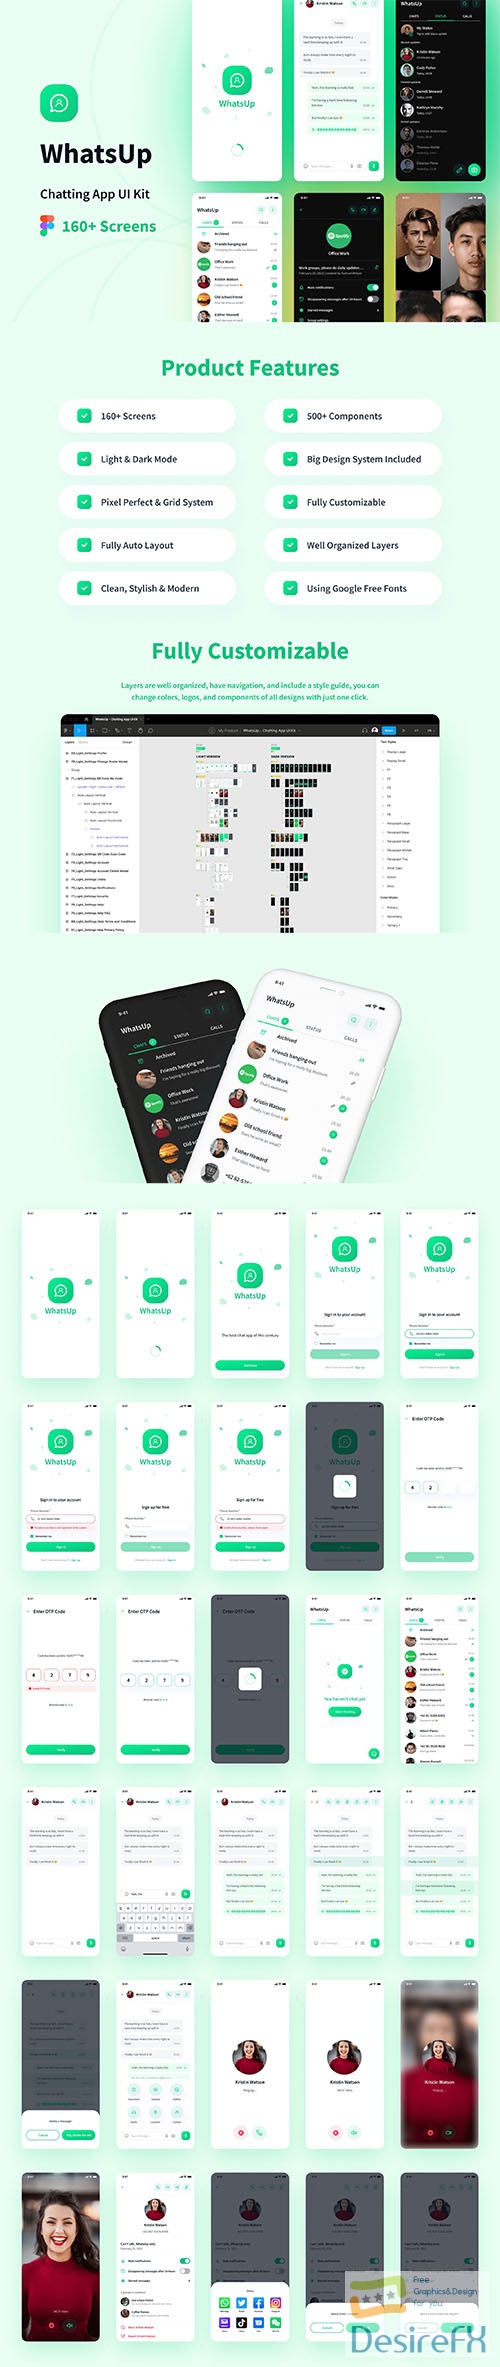 WhatsUp - Chatting App UI Kit UI8